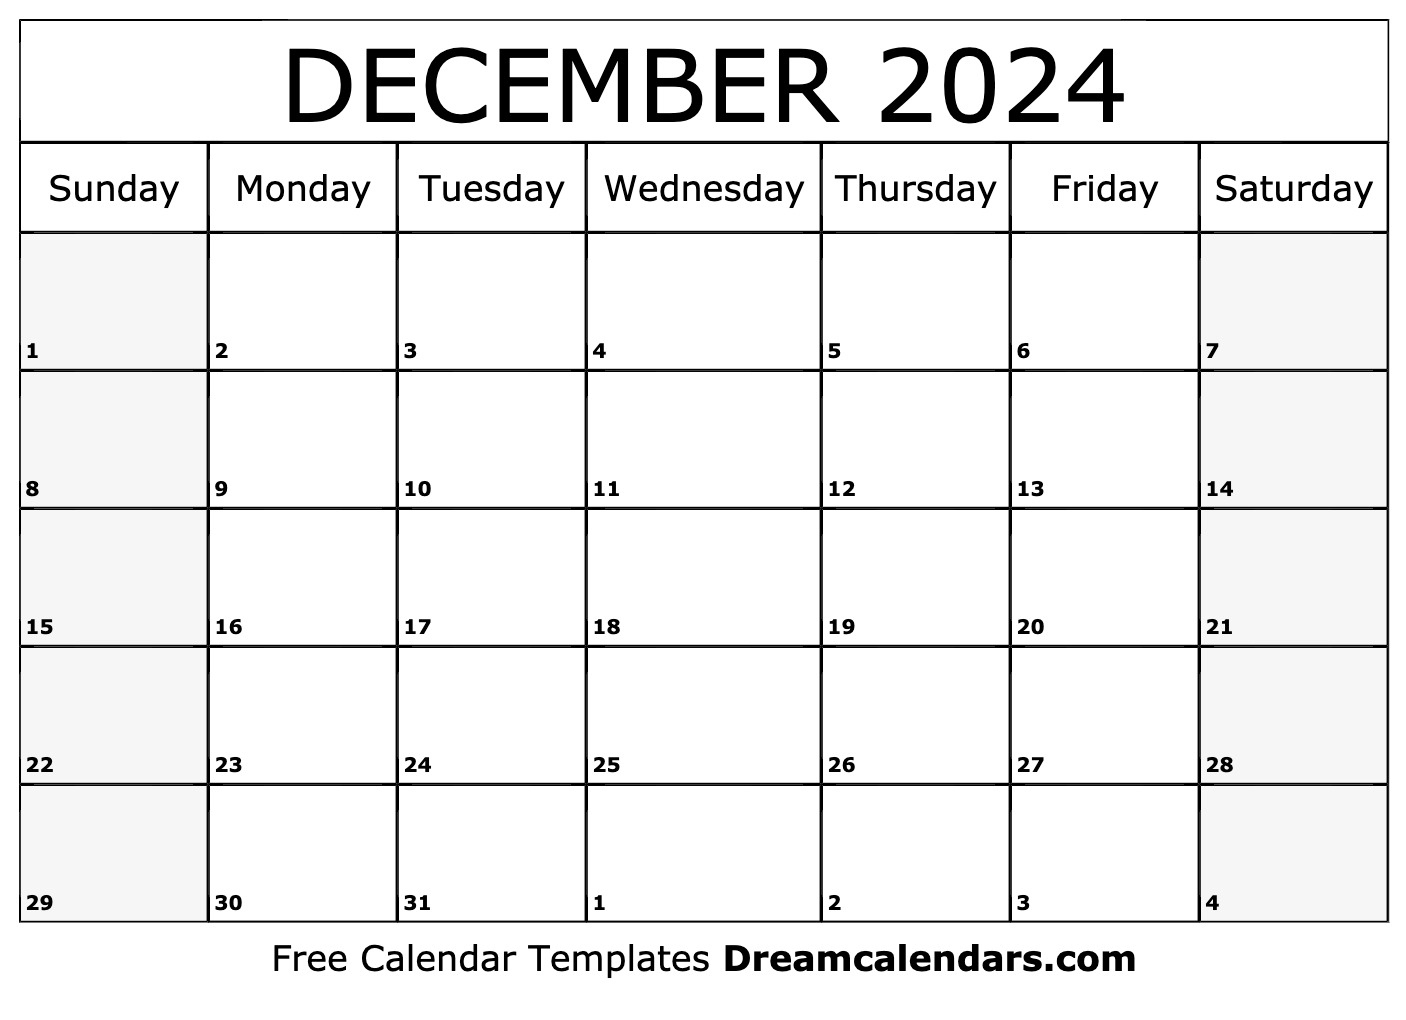 December 2024 Calendar | Free Blank Printable With Holidays | Printable Calendar Dec 2024